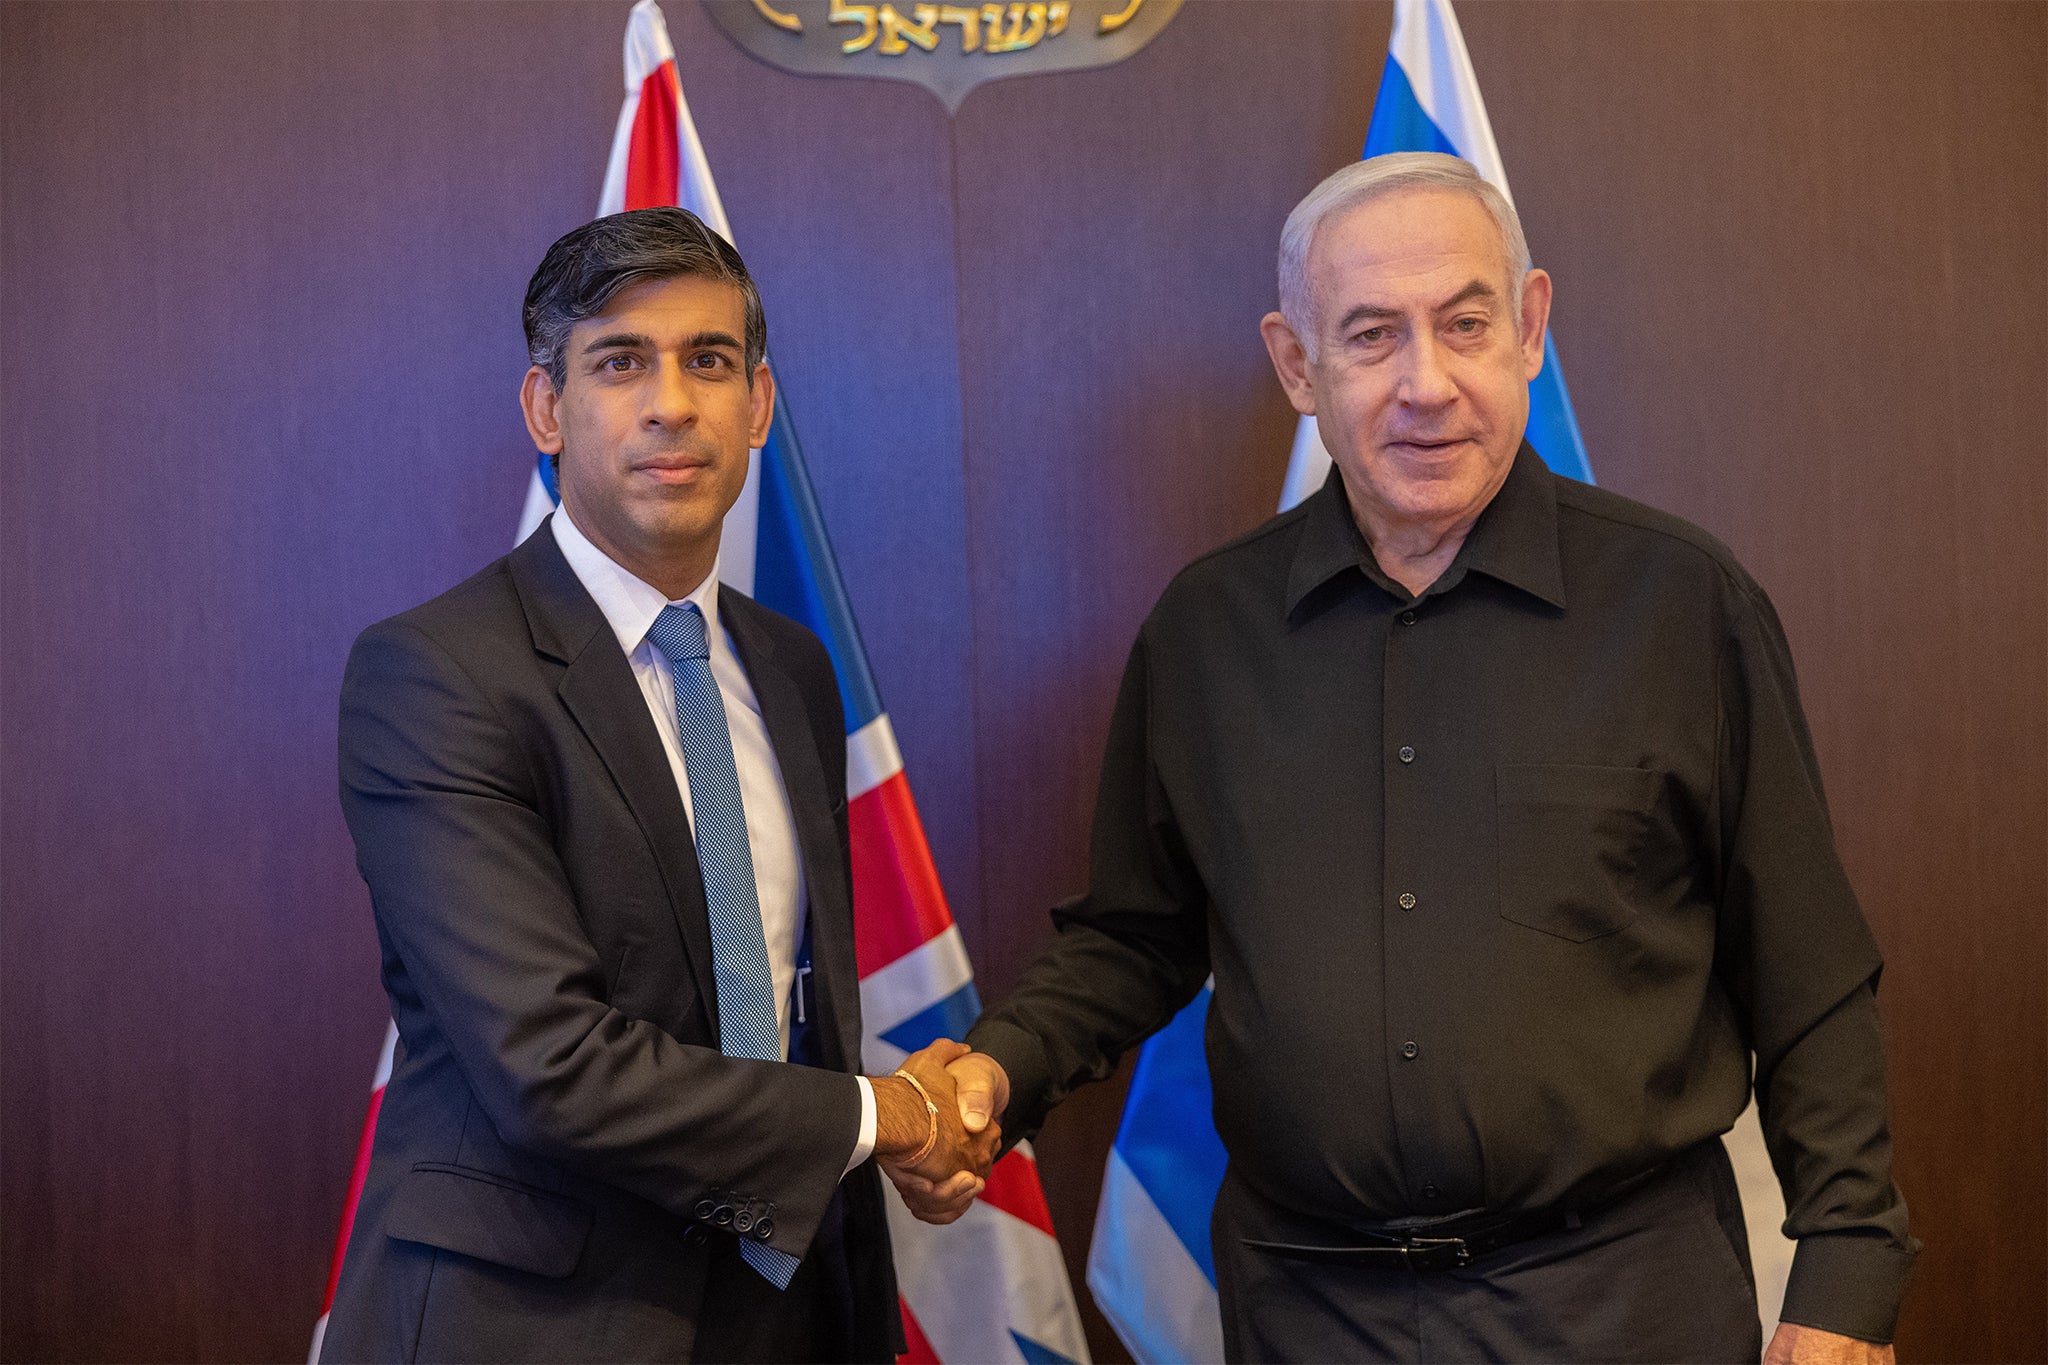 UK Prime Minister Rishi Sunak meets Israeli Prime Minister Benjamin Netanyahu